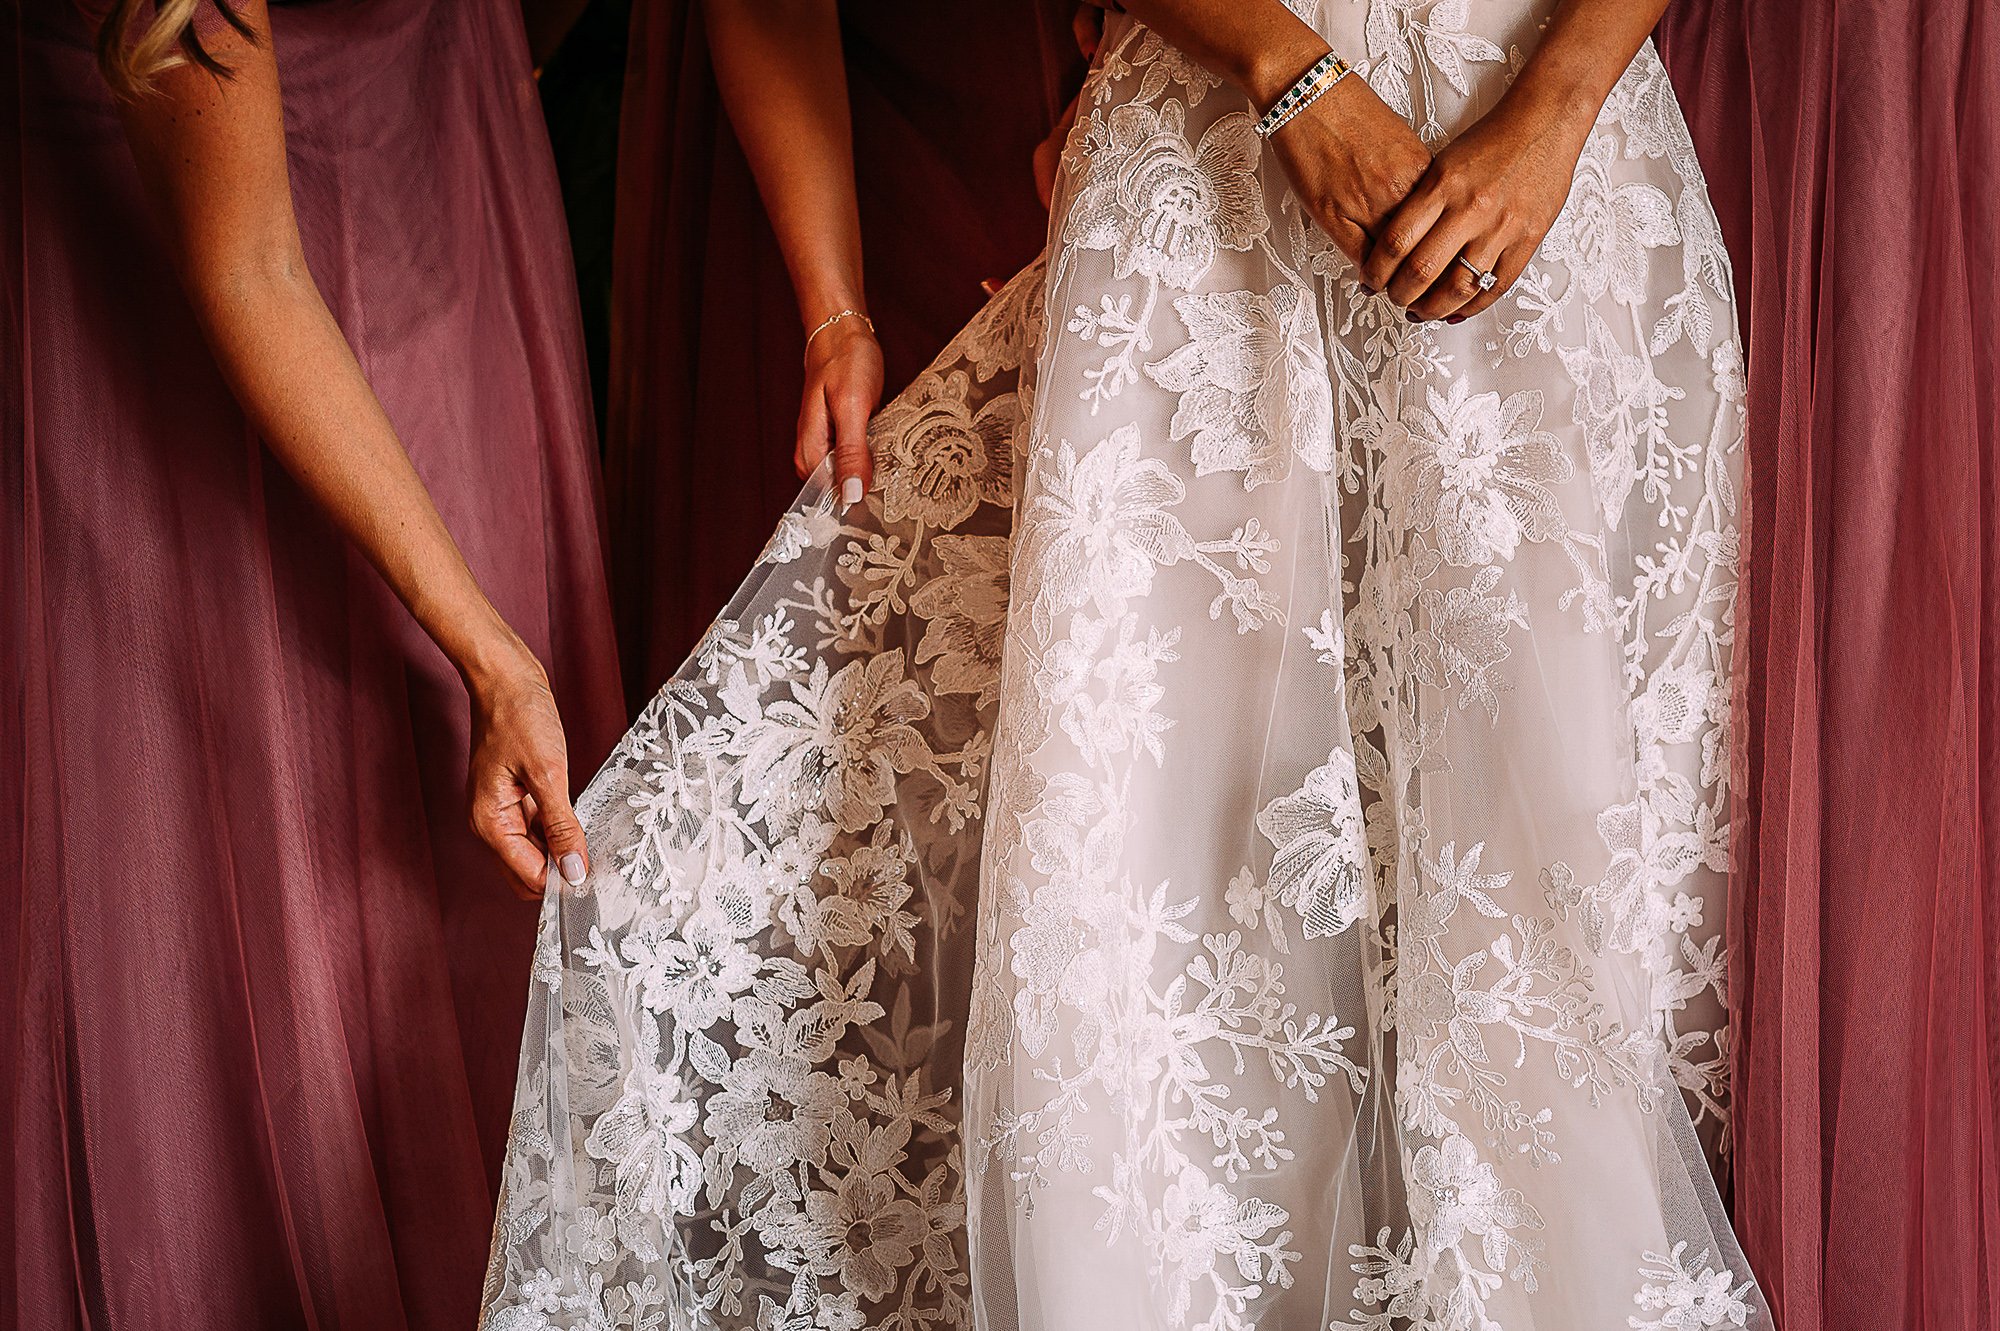  Detail shot of the bridesmaid in pink dress adjusting the brides dress. 